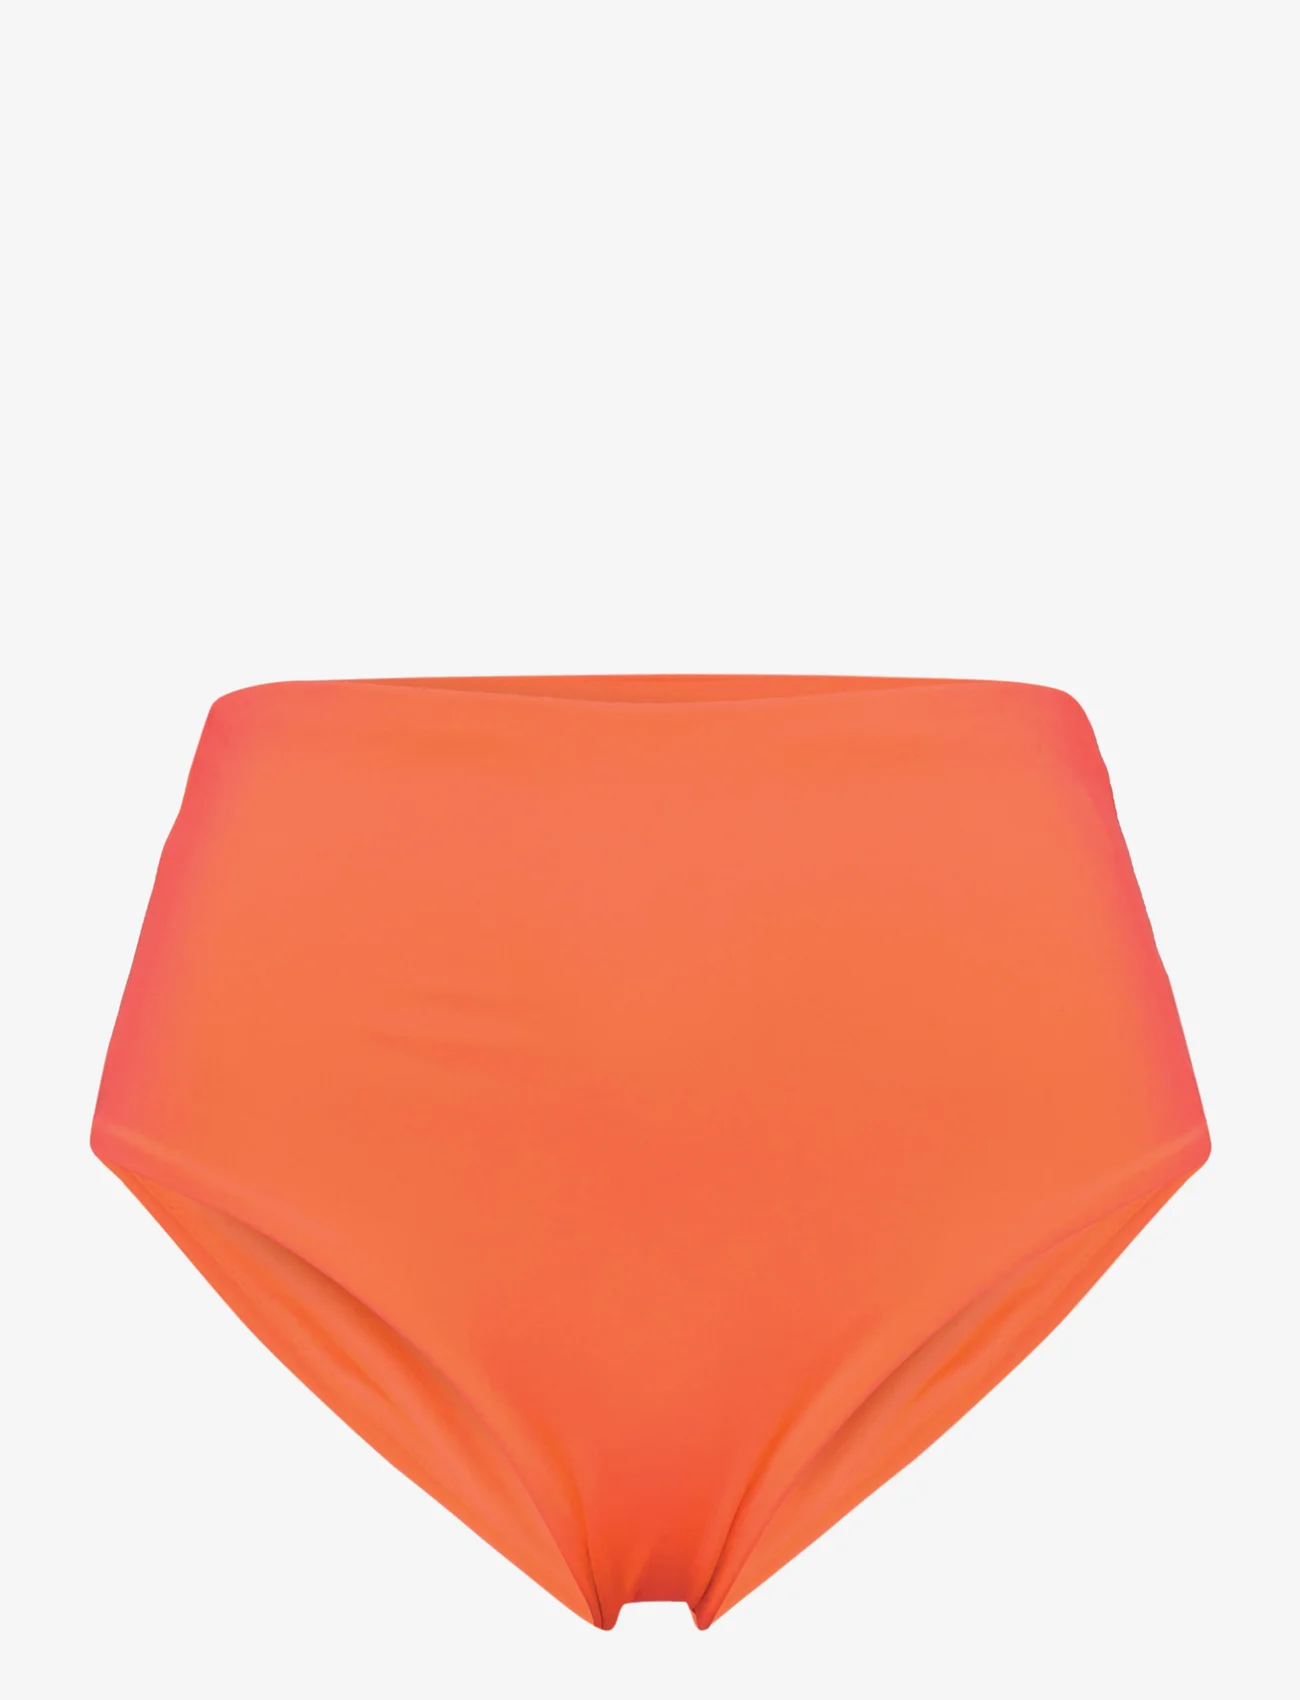 RODEBJER - Rodebjer Bommie - bikinihosen mit hoher taille - hot tangerine - 0